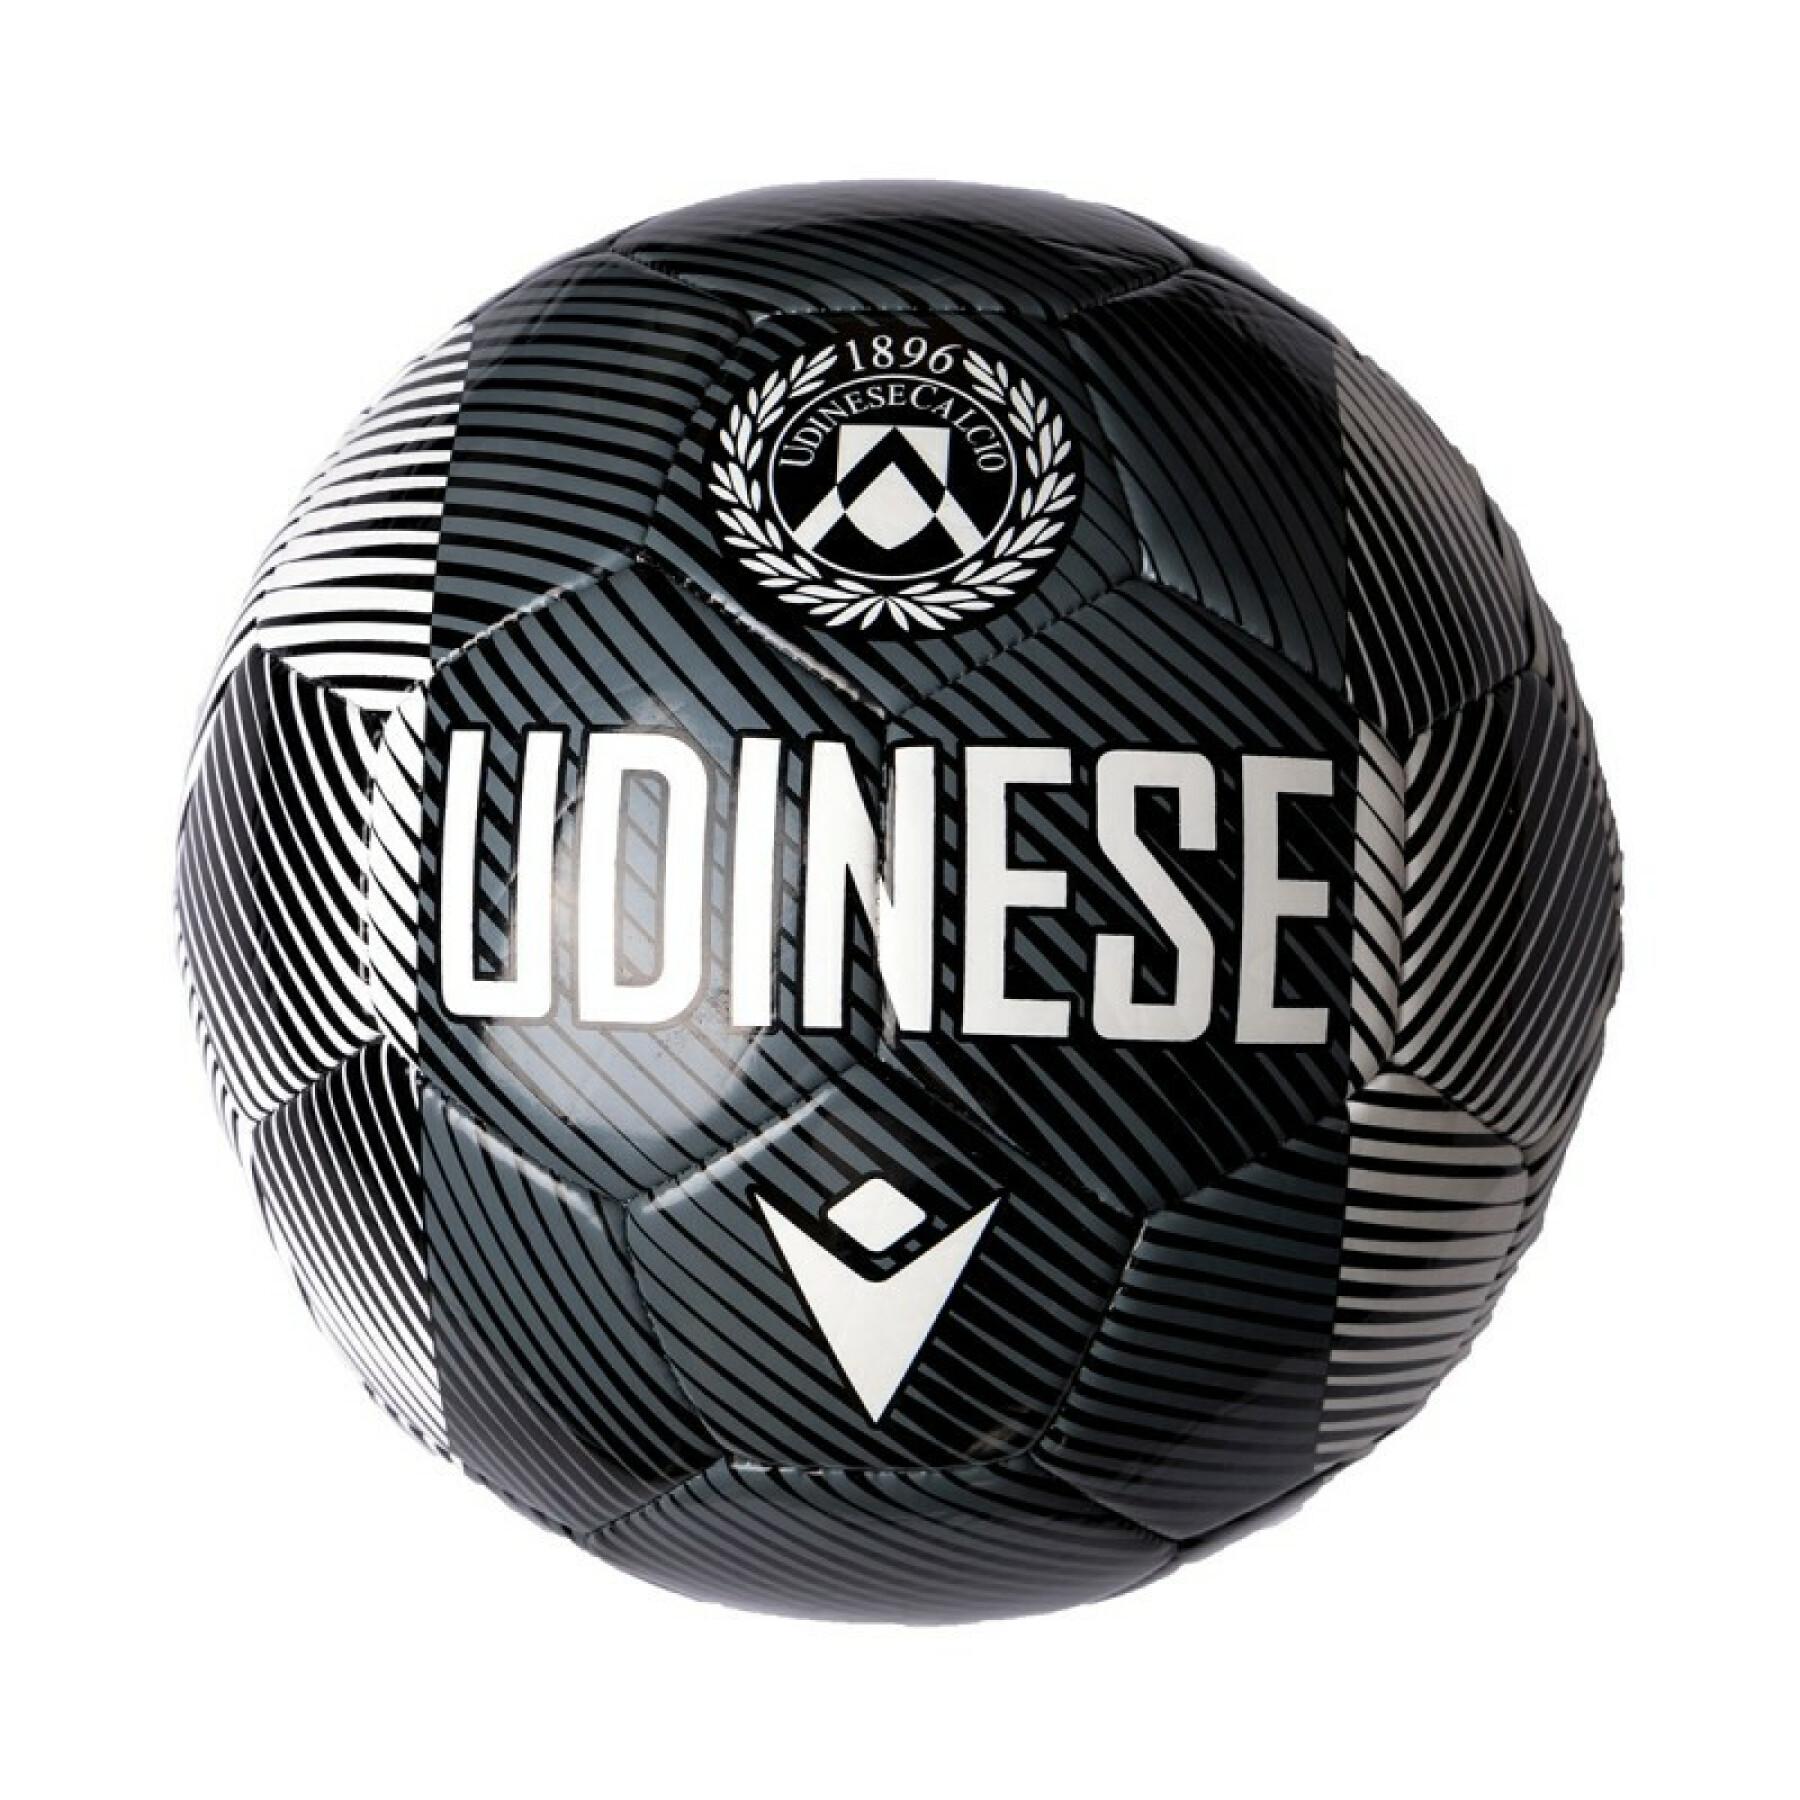 Ballong Udinese